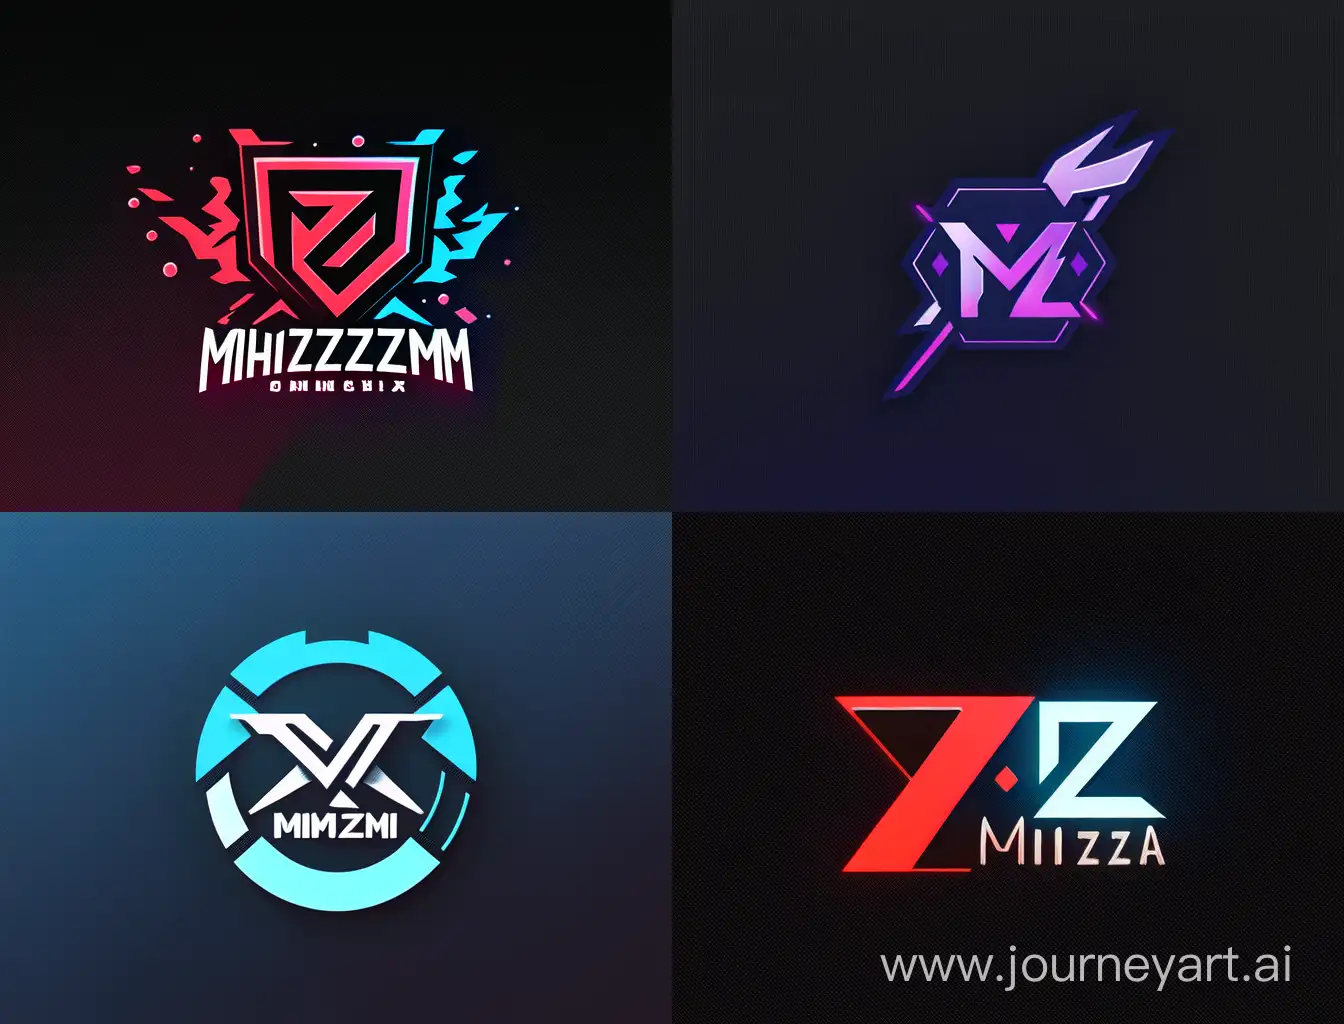 ProgrammingThemed-Personal-Website-Logo-Featuring-MISHAZX